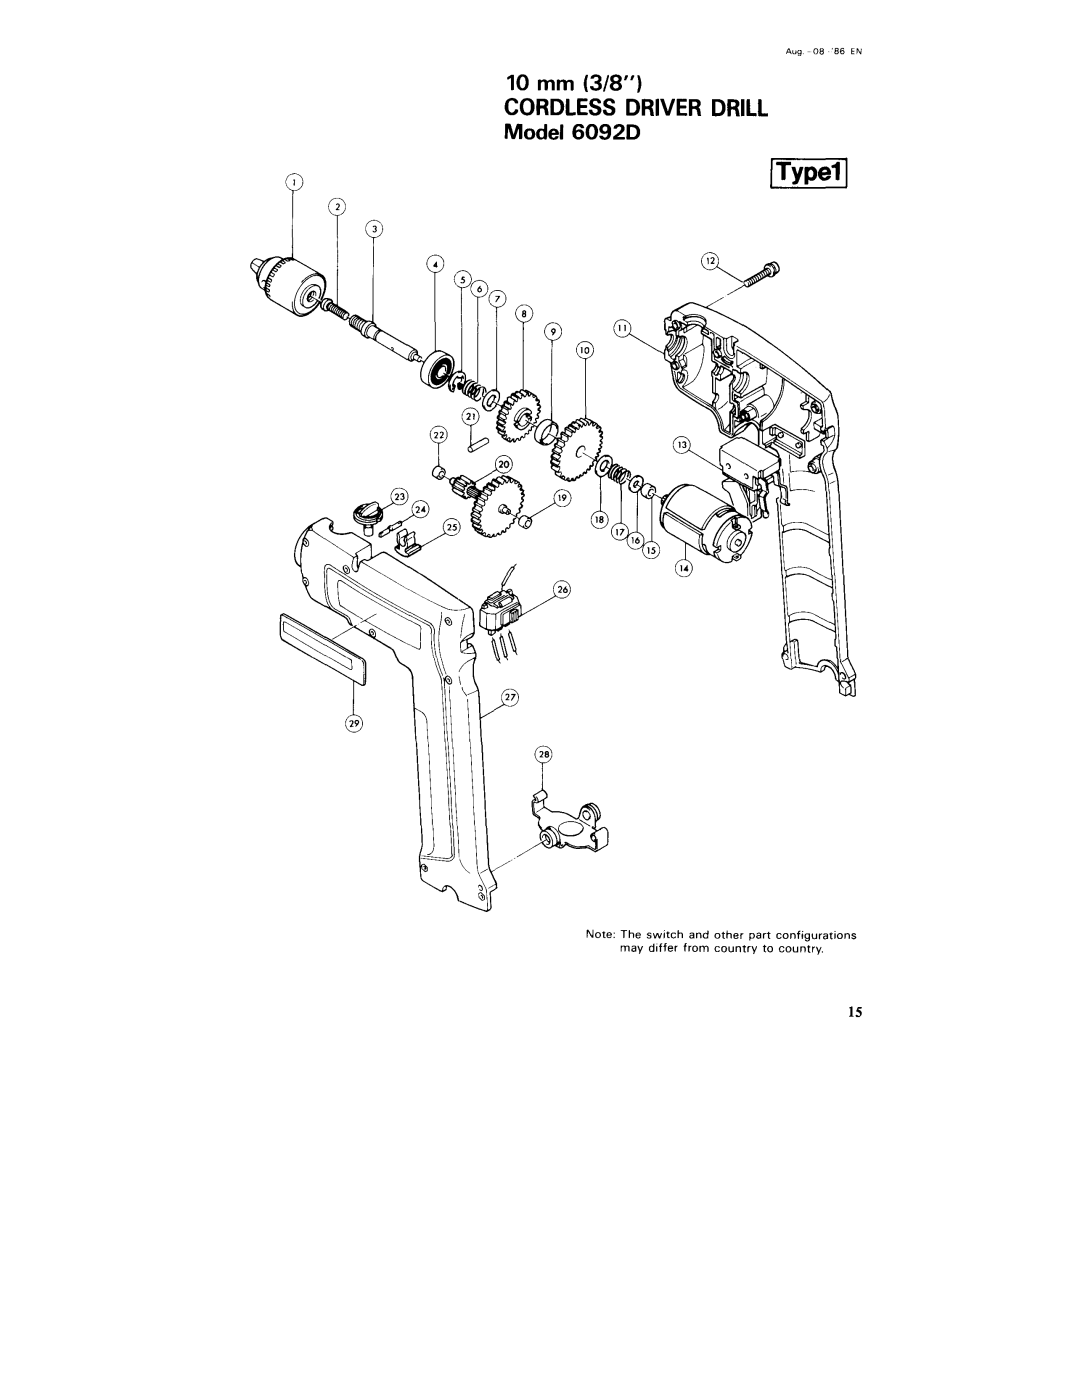 Makita 60921, 6092DW instruction manual Cordless Driver Drill, 10 mm 3/8”, Model 6092D, Aug - 08 86 E N 